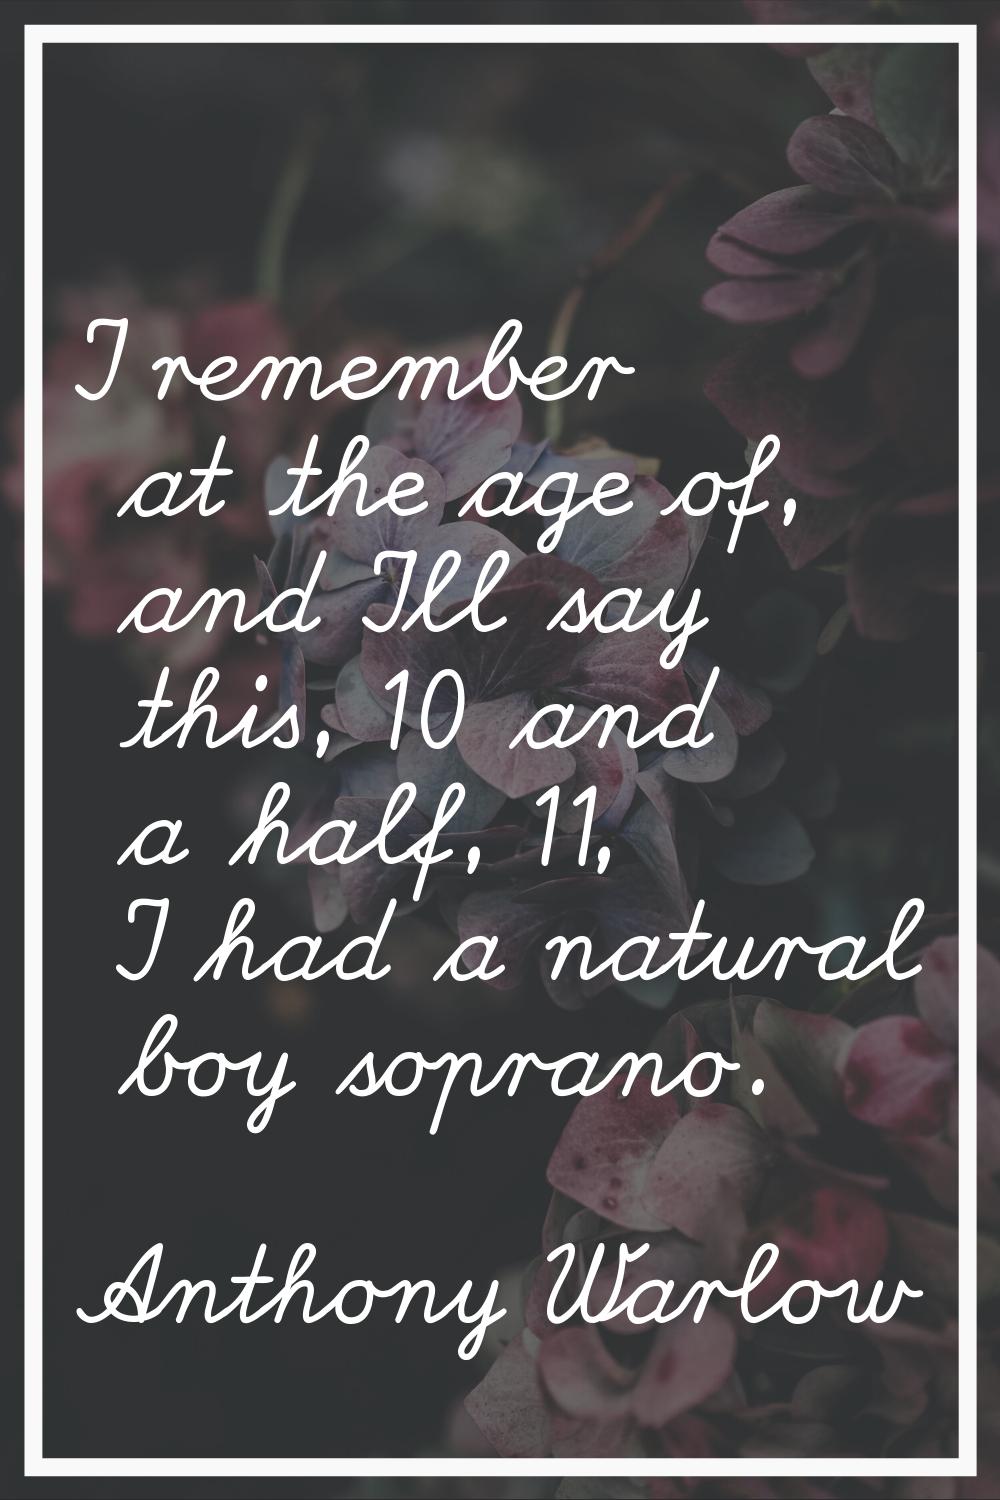 I remember at the age of, and I'll say this, 10 and a half, 11, I had a natural boy soprano.